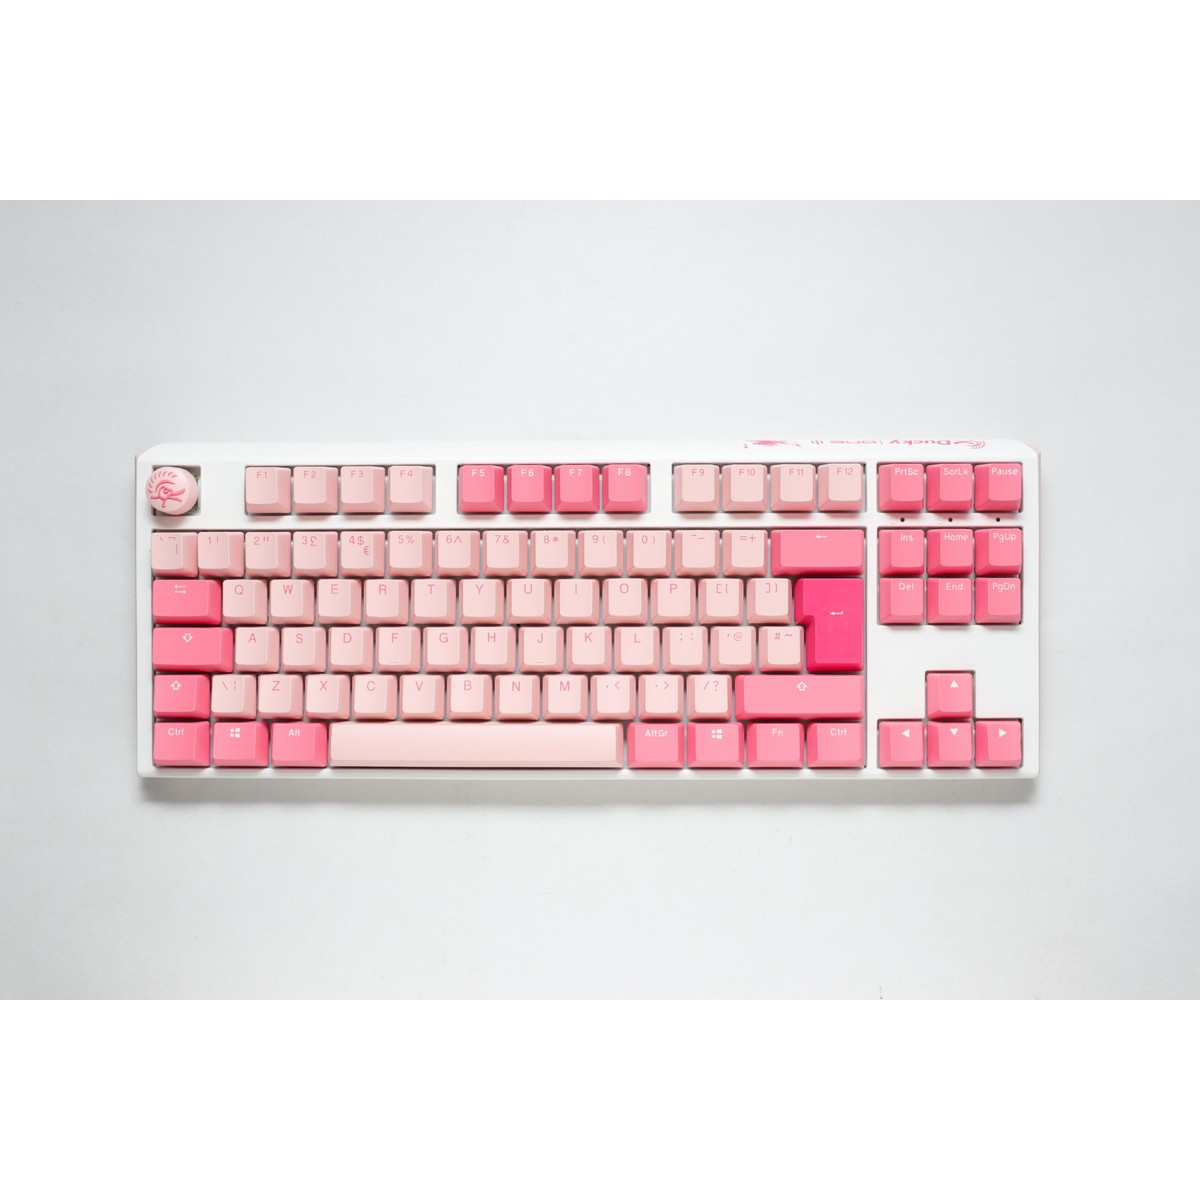 Ducky One 3 Gossamer Pink TKL 80% USB Cherry MX Brown Mechanical Gaming Keyboard